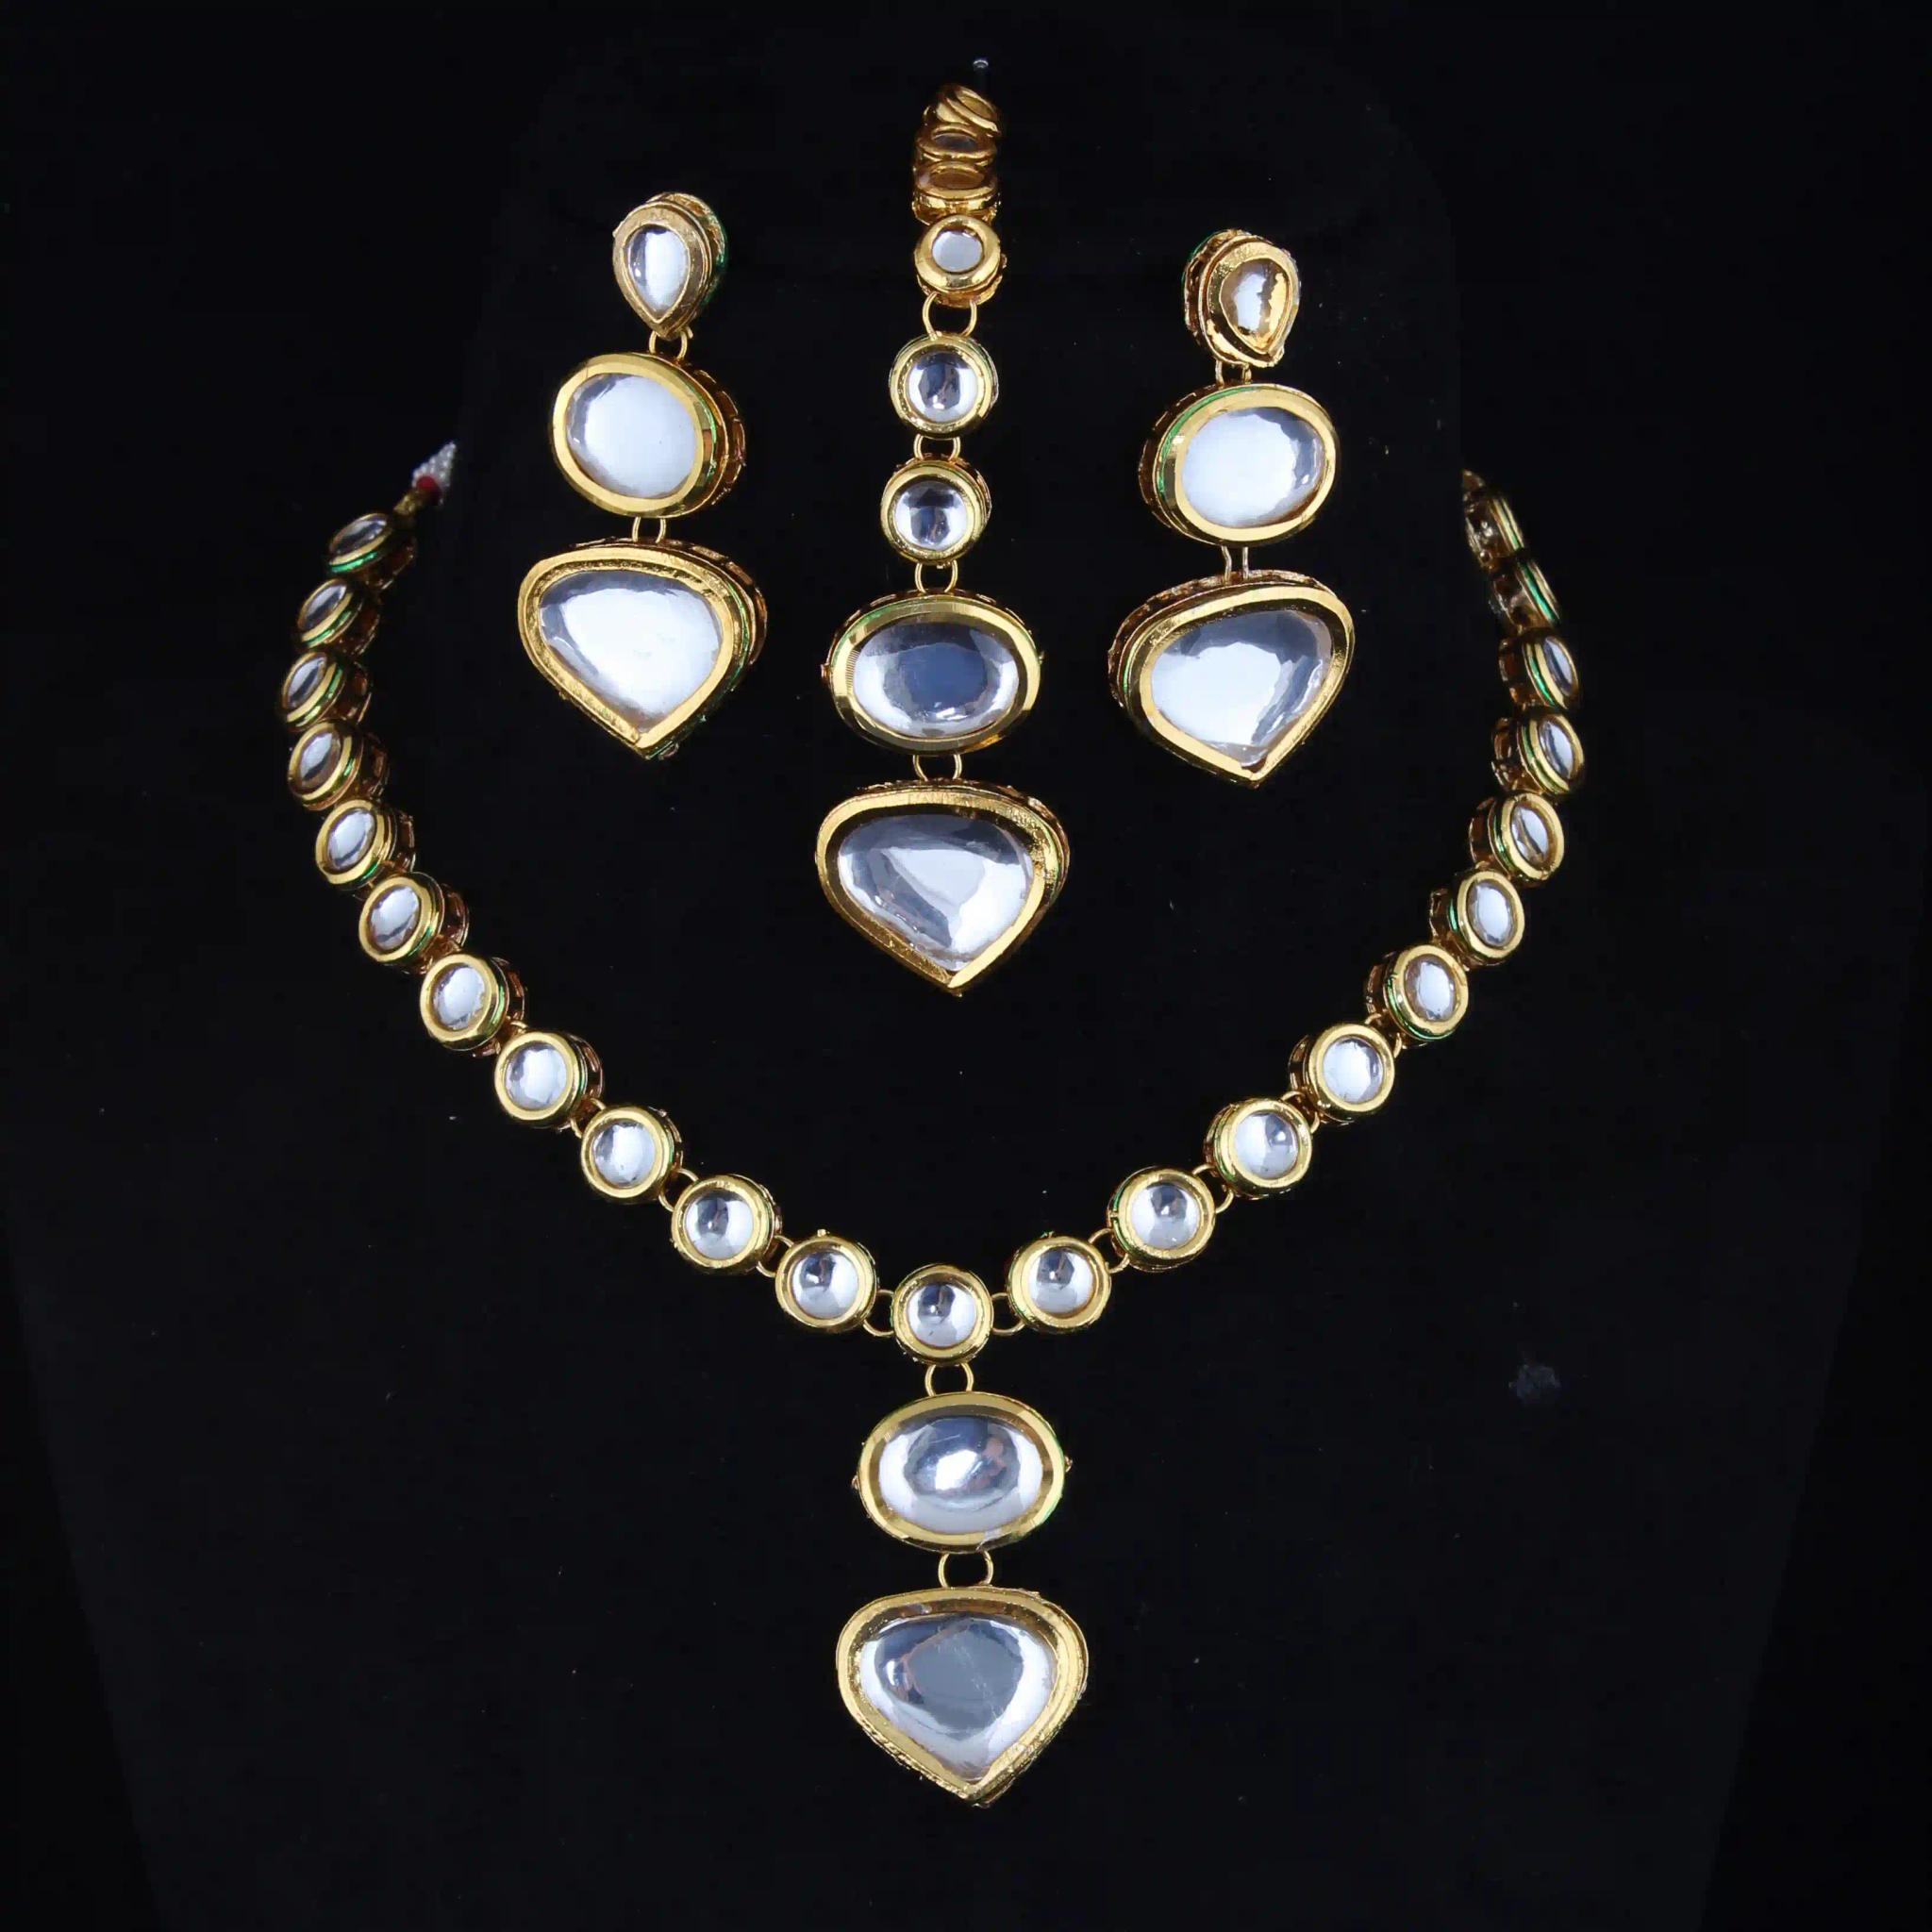 Gold Plated(18k) Small Round Kundan Choker Necklace Set With Maang Tika - White